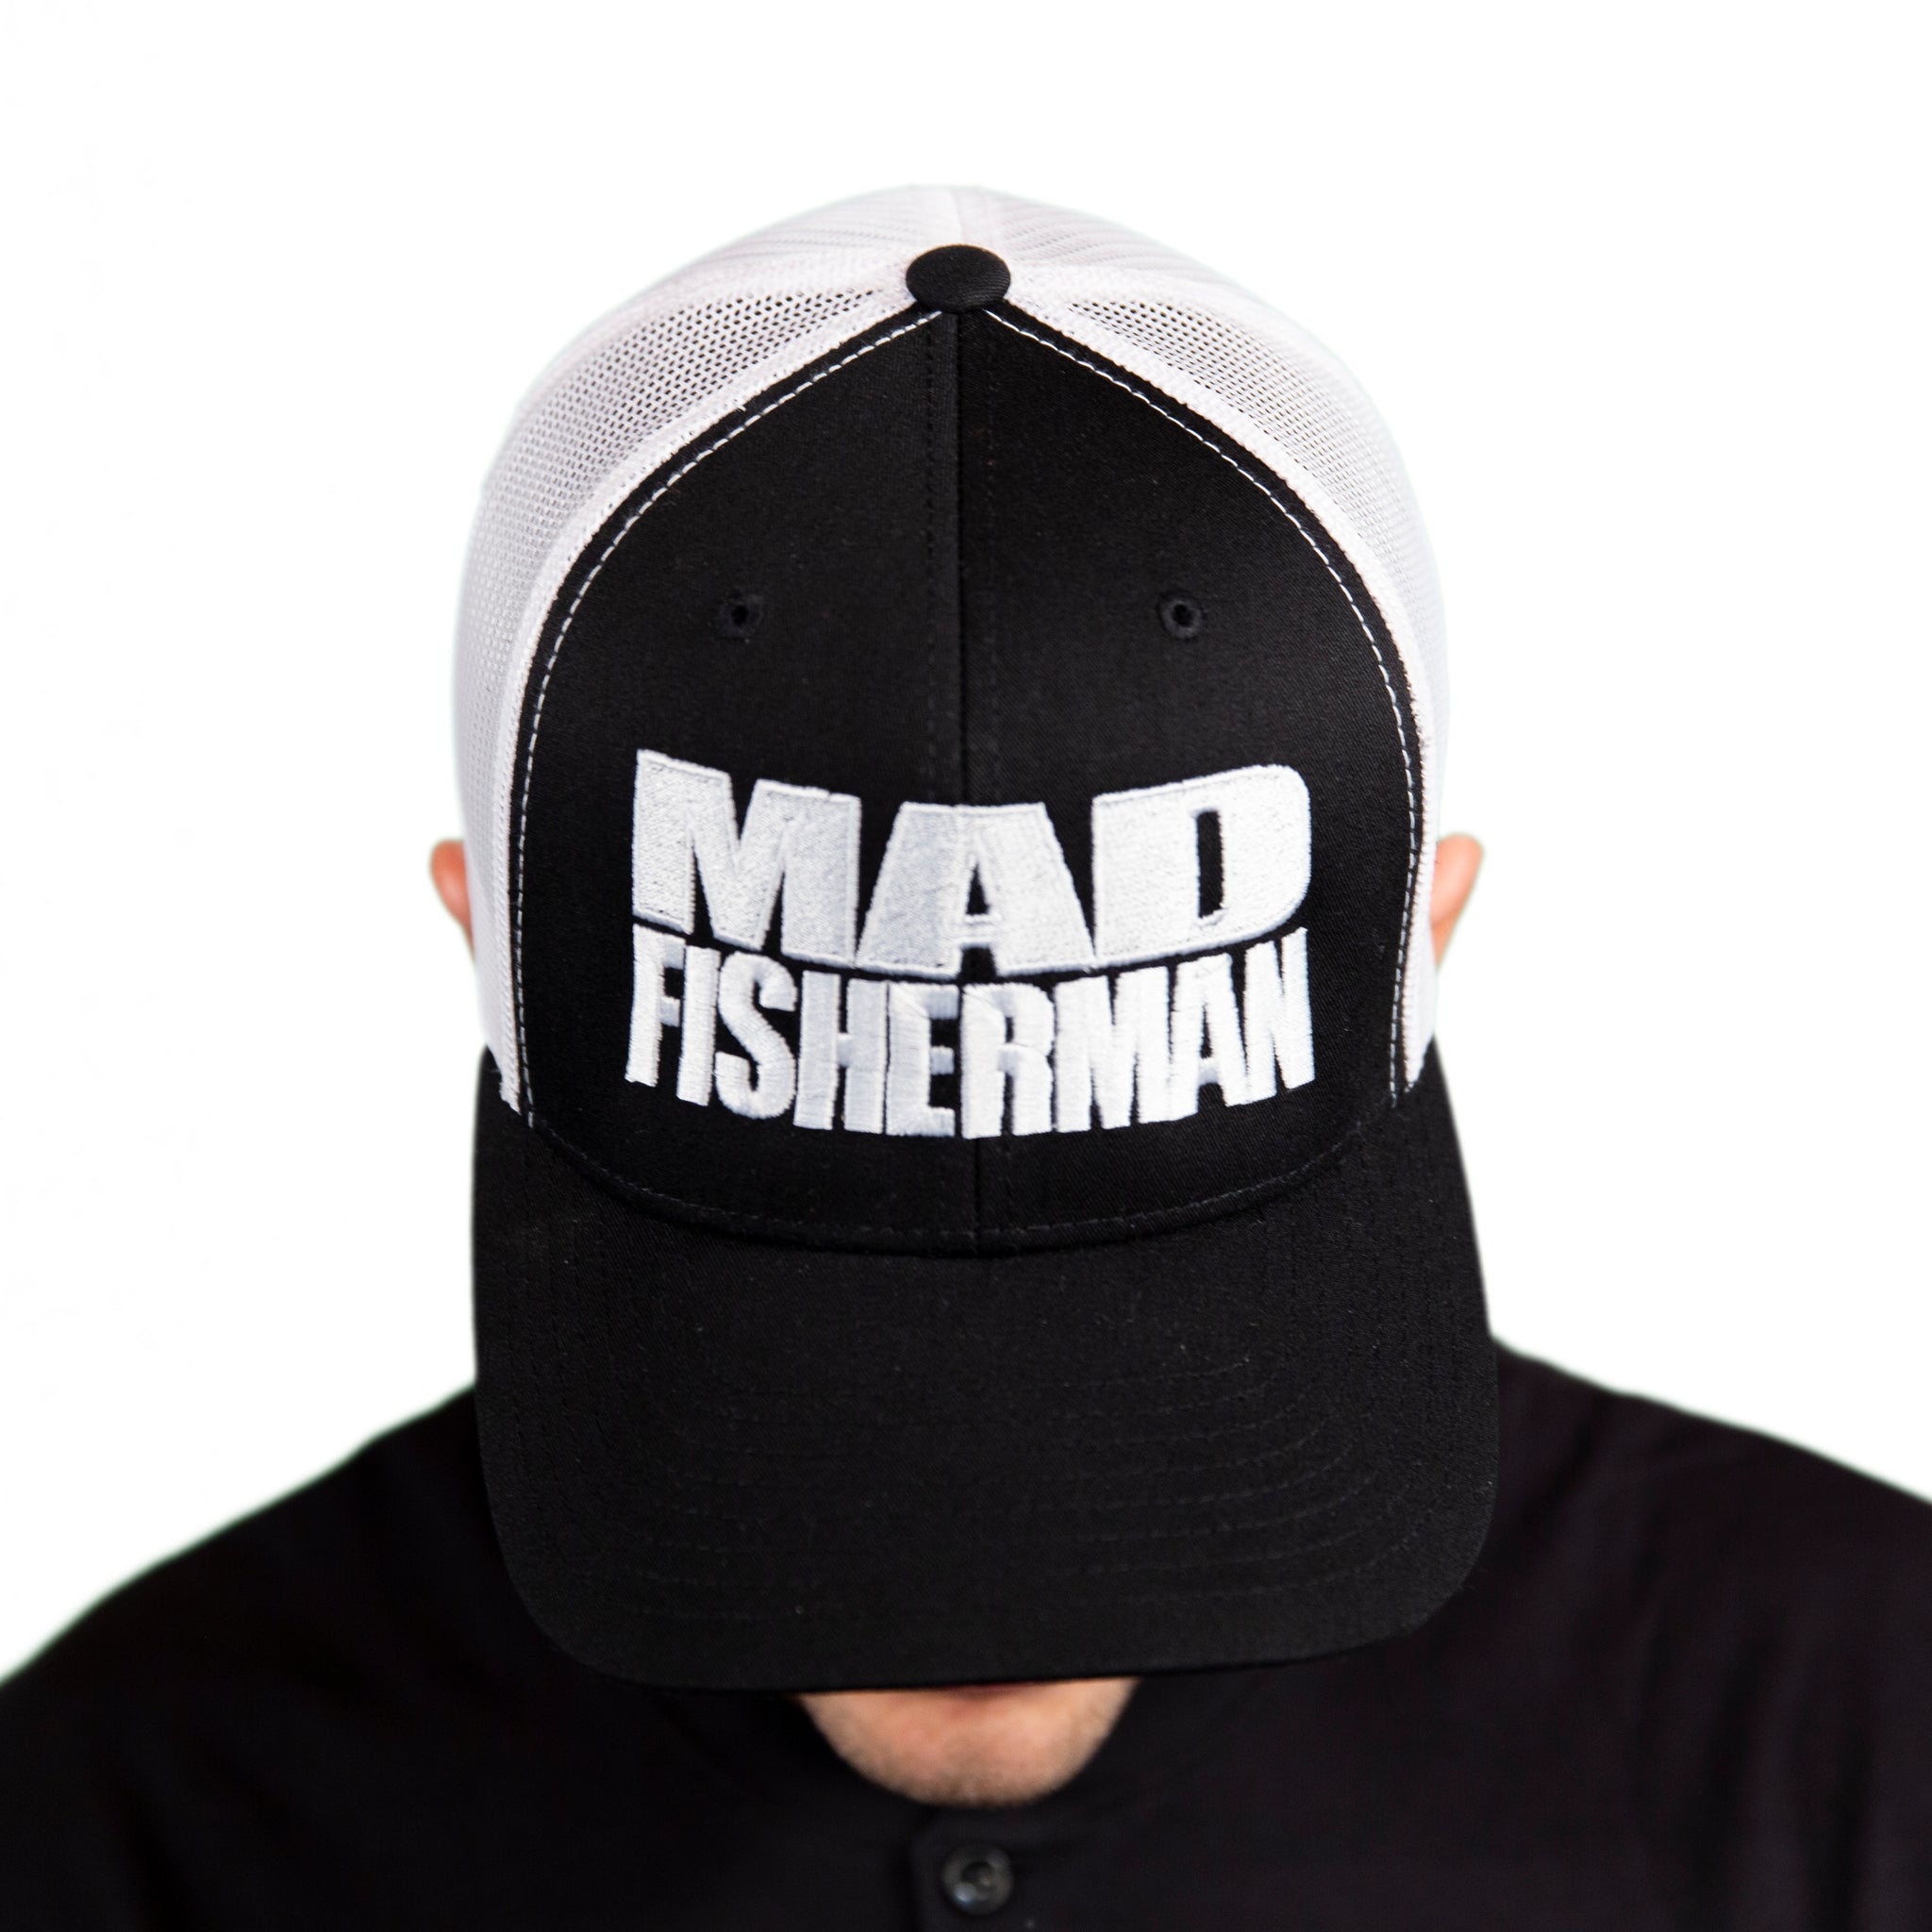 “MAD FISHERMAN” Black Snapback (white mesh)